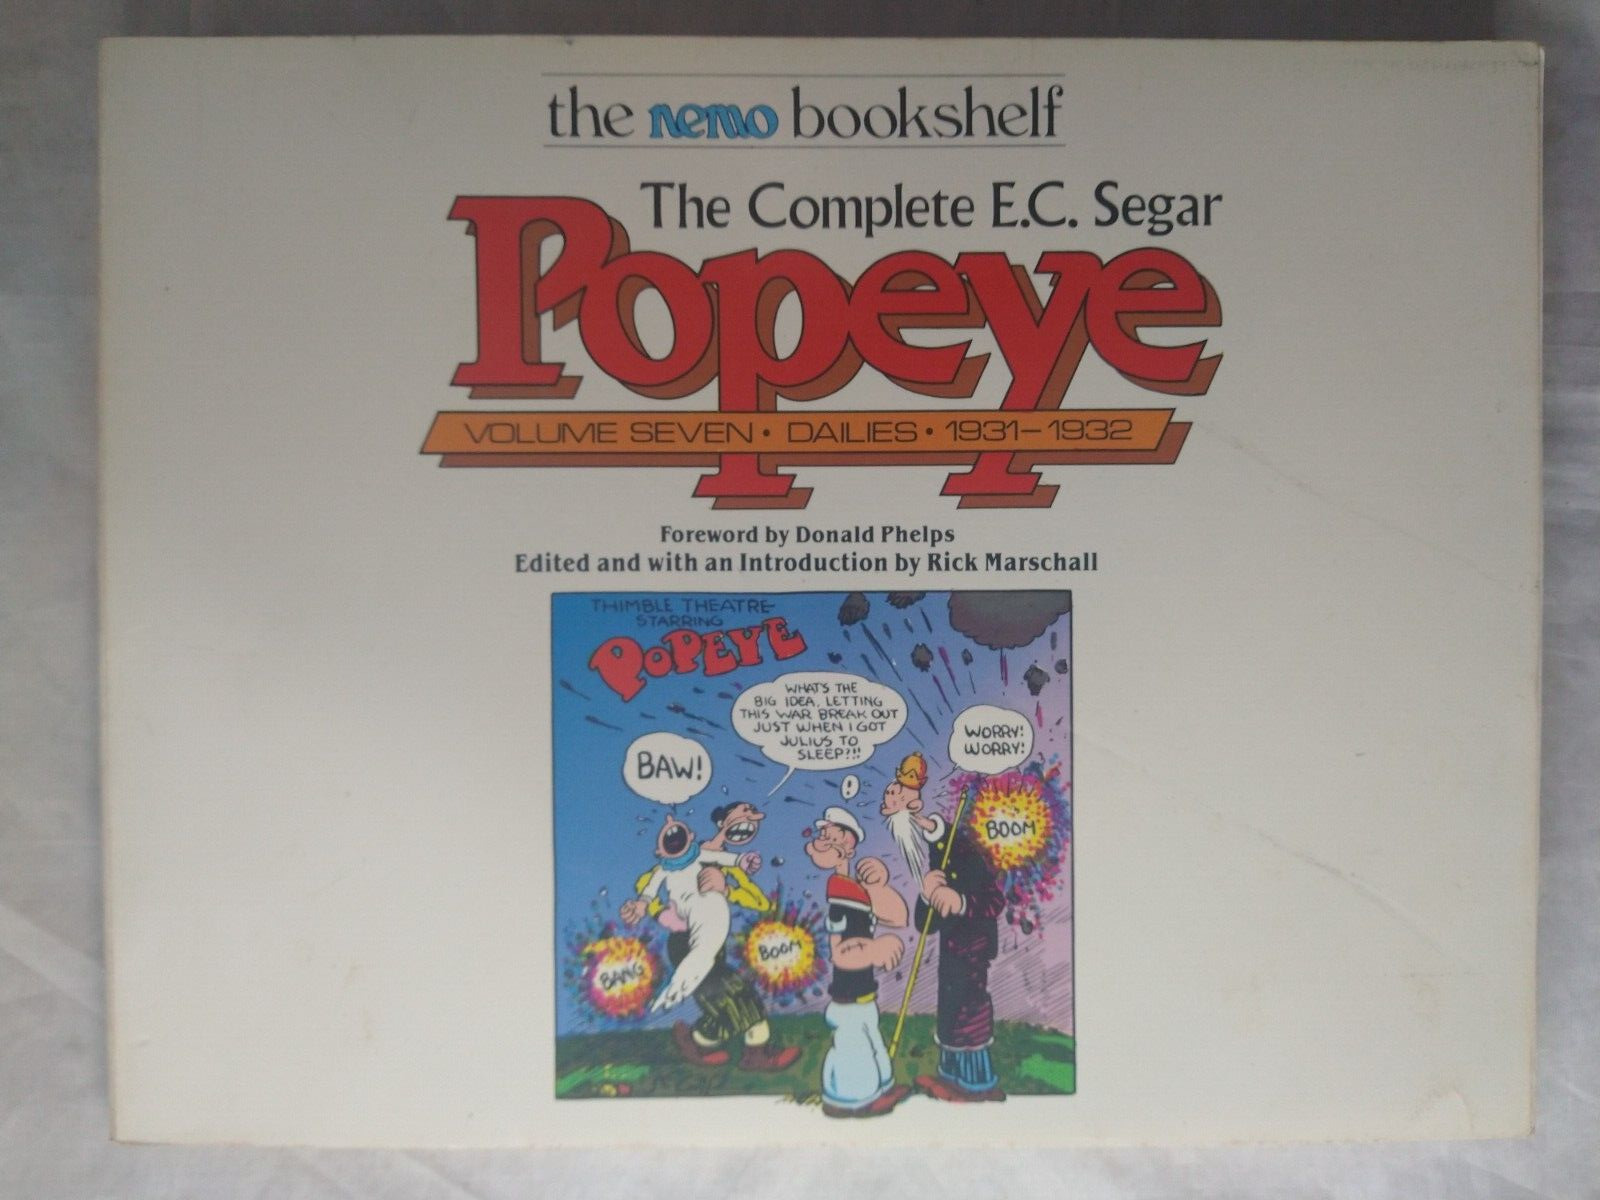 The Complete E.C. Segar Popeye Volume Seven: Dailies 1931-1932 Vintage Paperback